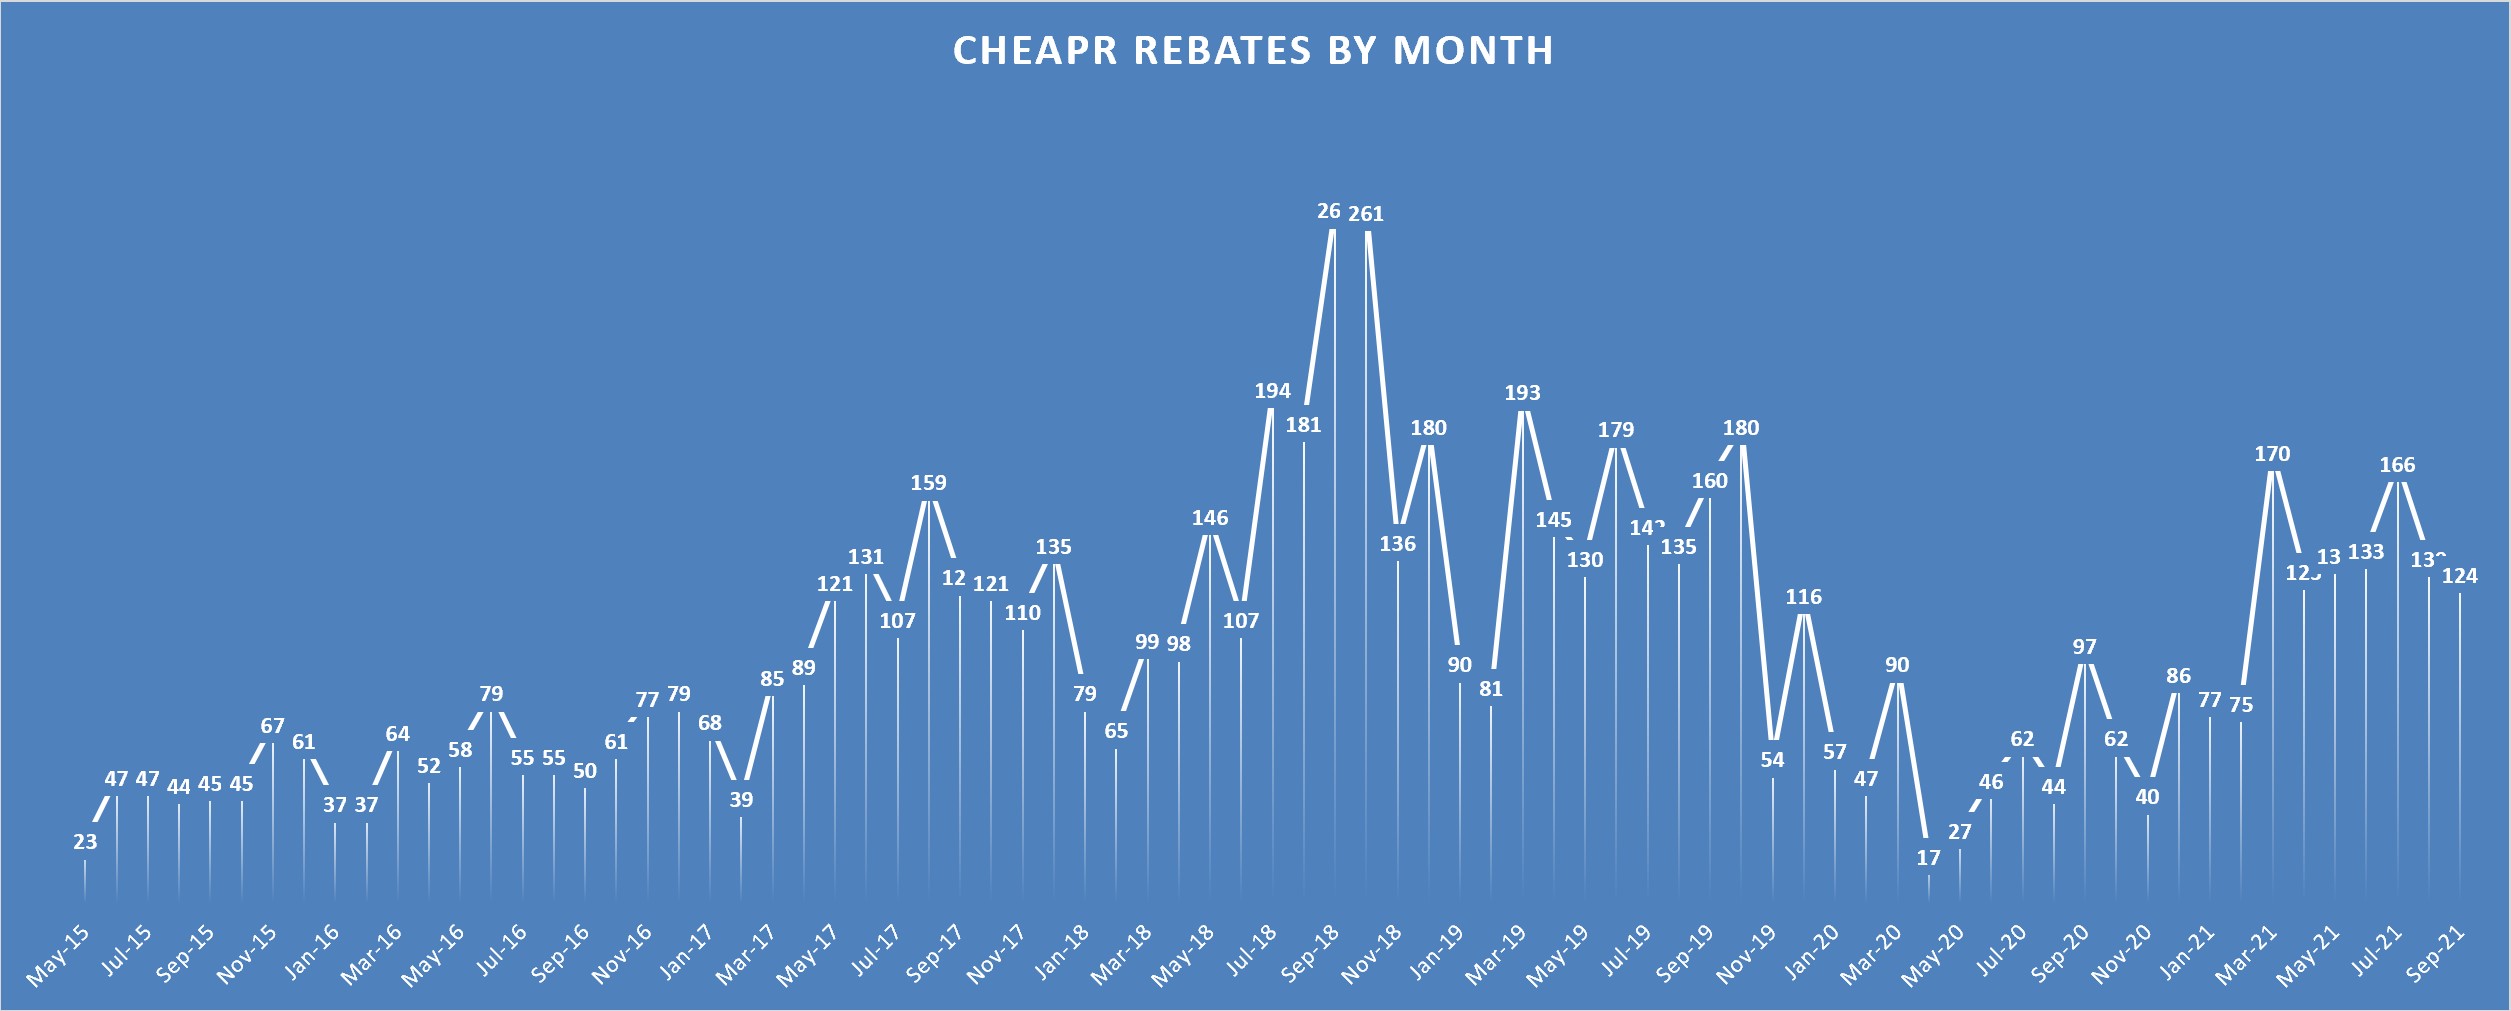 CHEAPR Rebates by month through September 2021